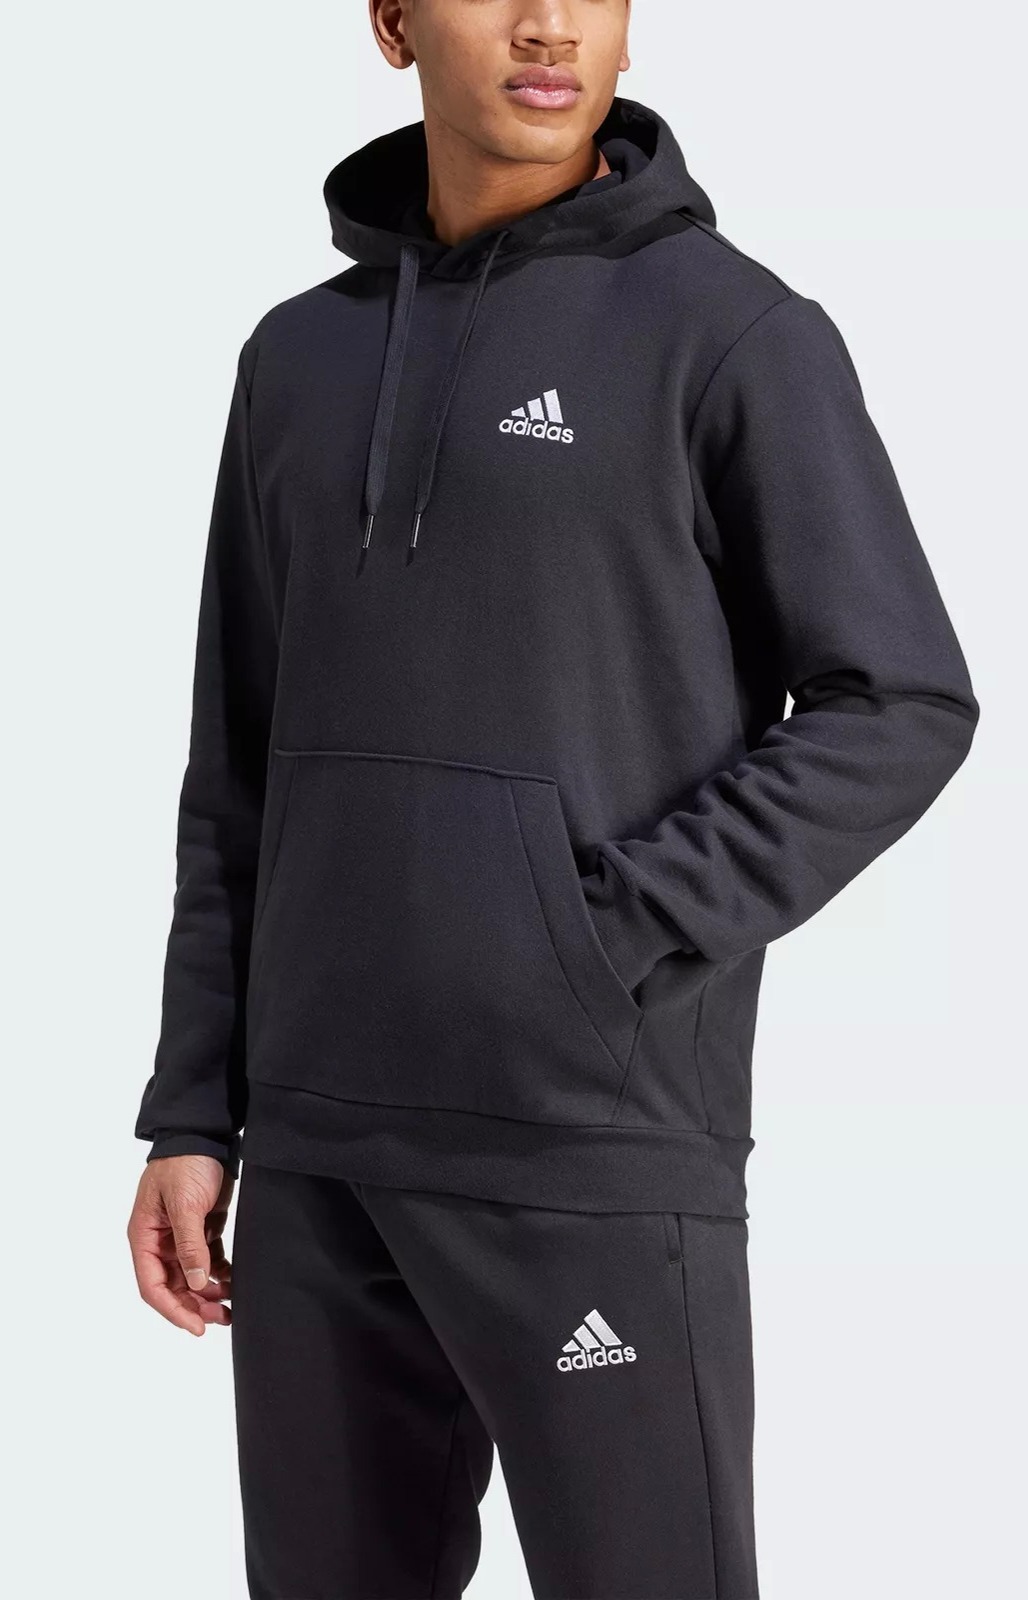 adidas Men's Essentials Fleece Hoodie (Black, Size M, L, XL) $18 + Free Shipping